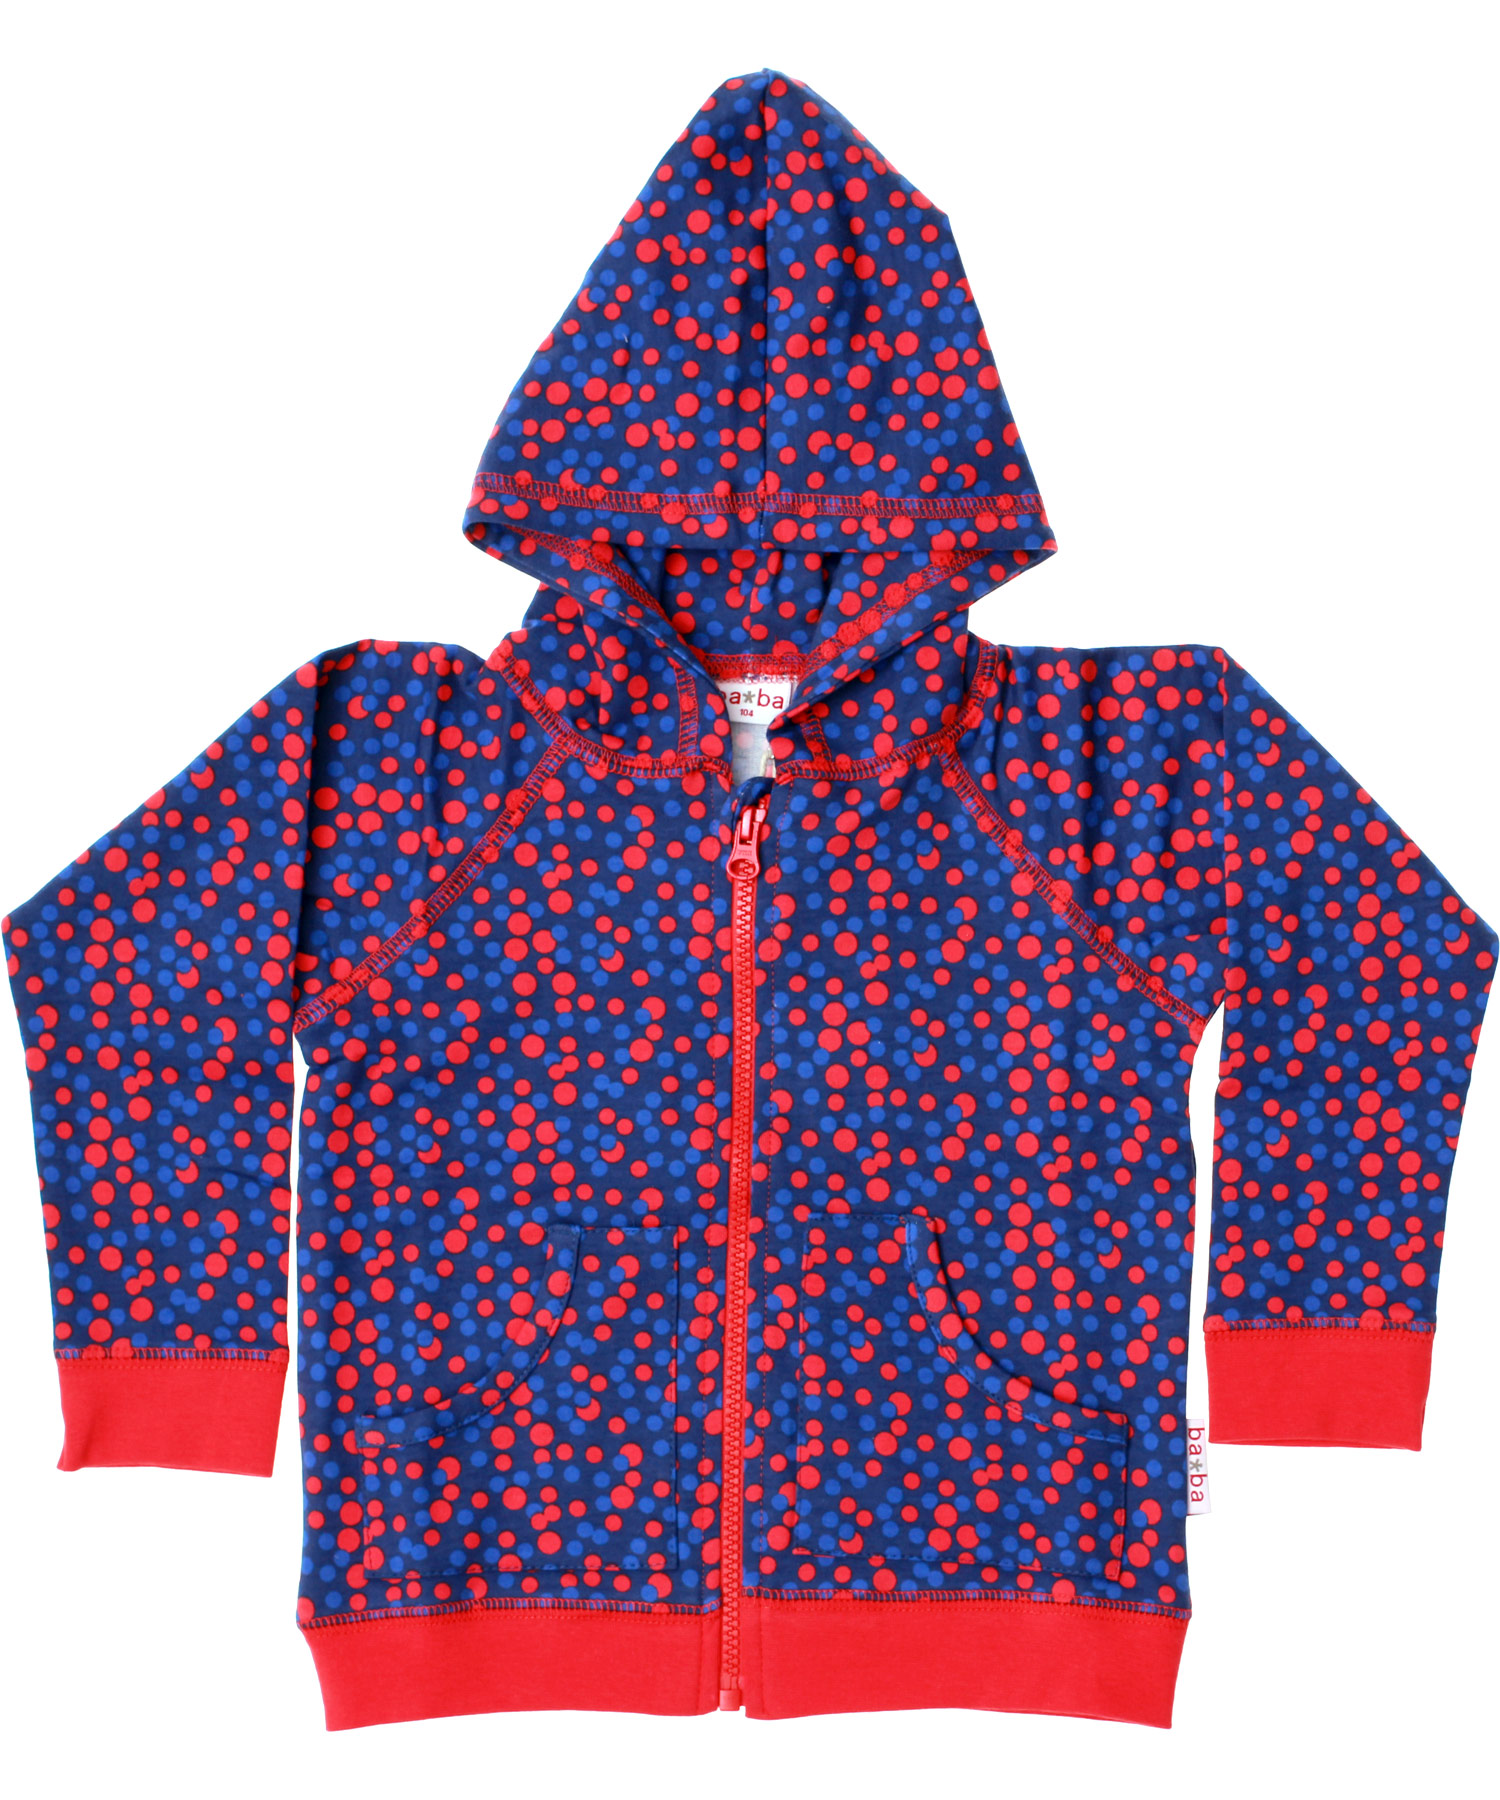 New! Baba Babywear superb hoodie with dotted print (Hoodie)